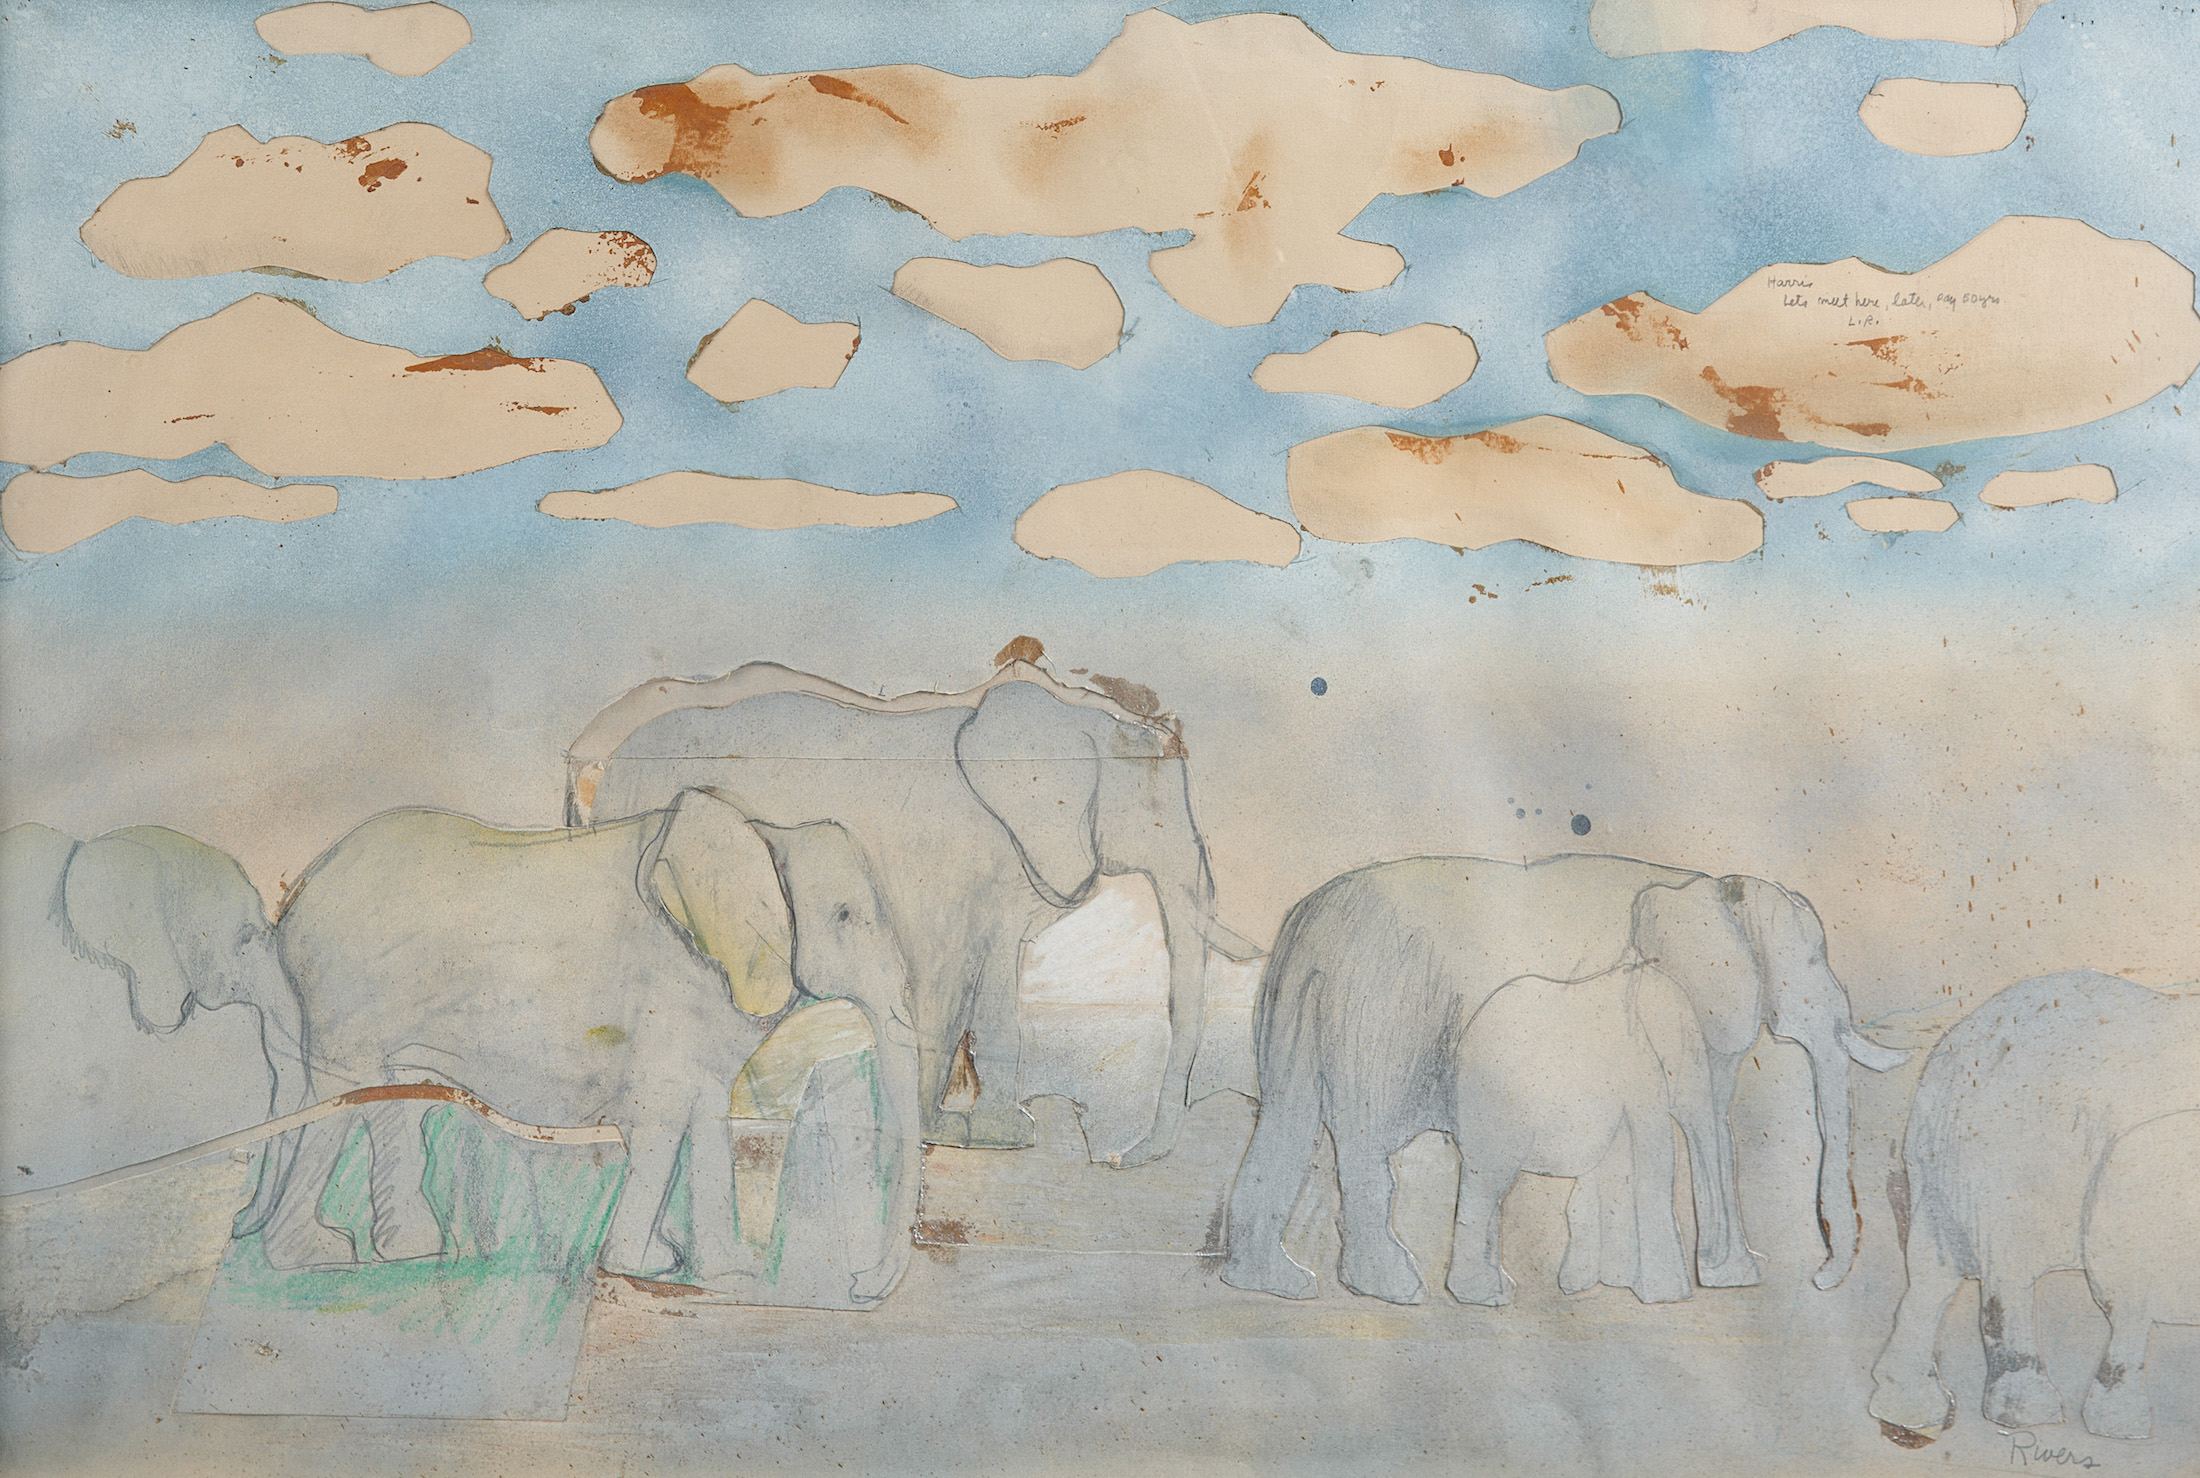 Lot #34 Larry Rivers, Elephants